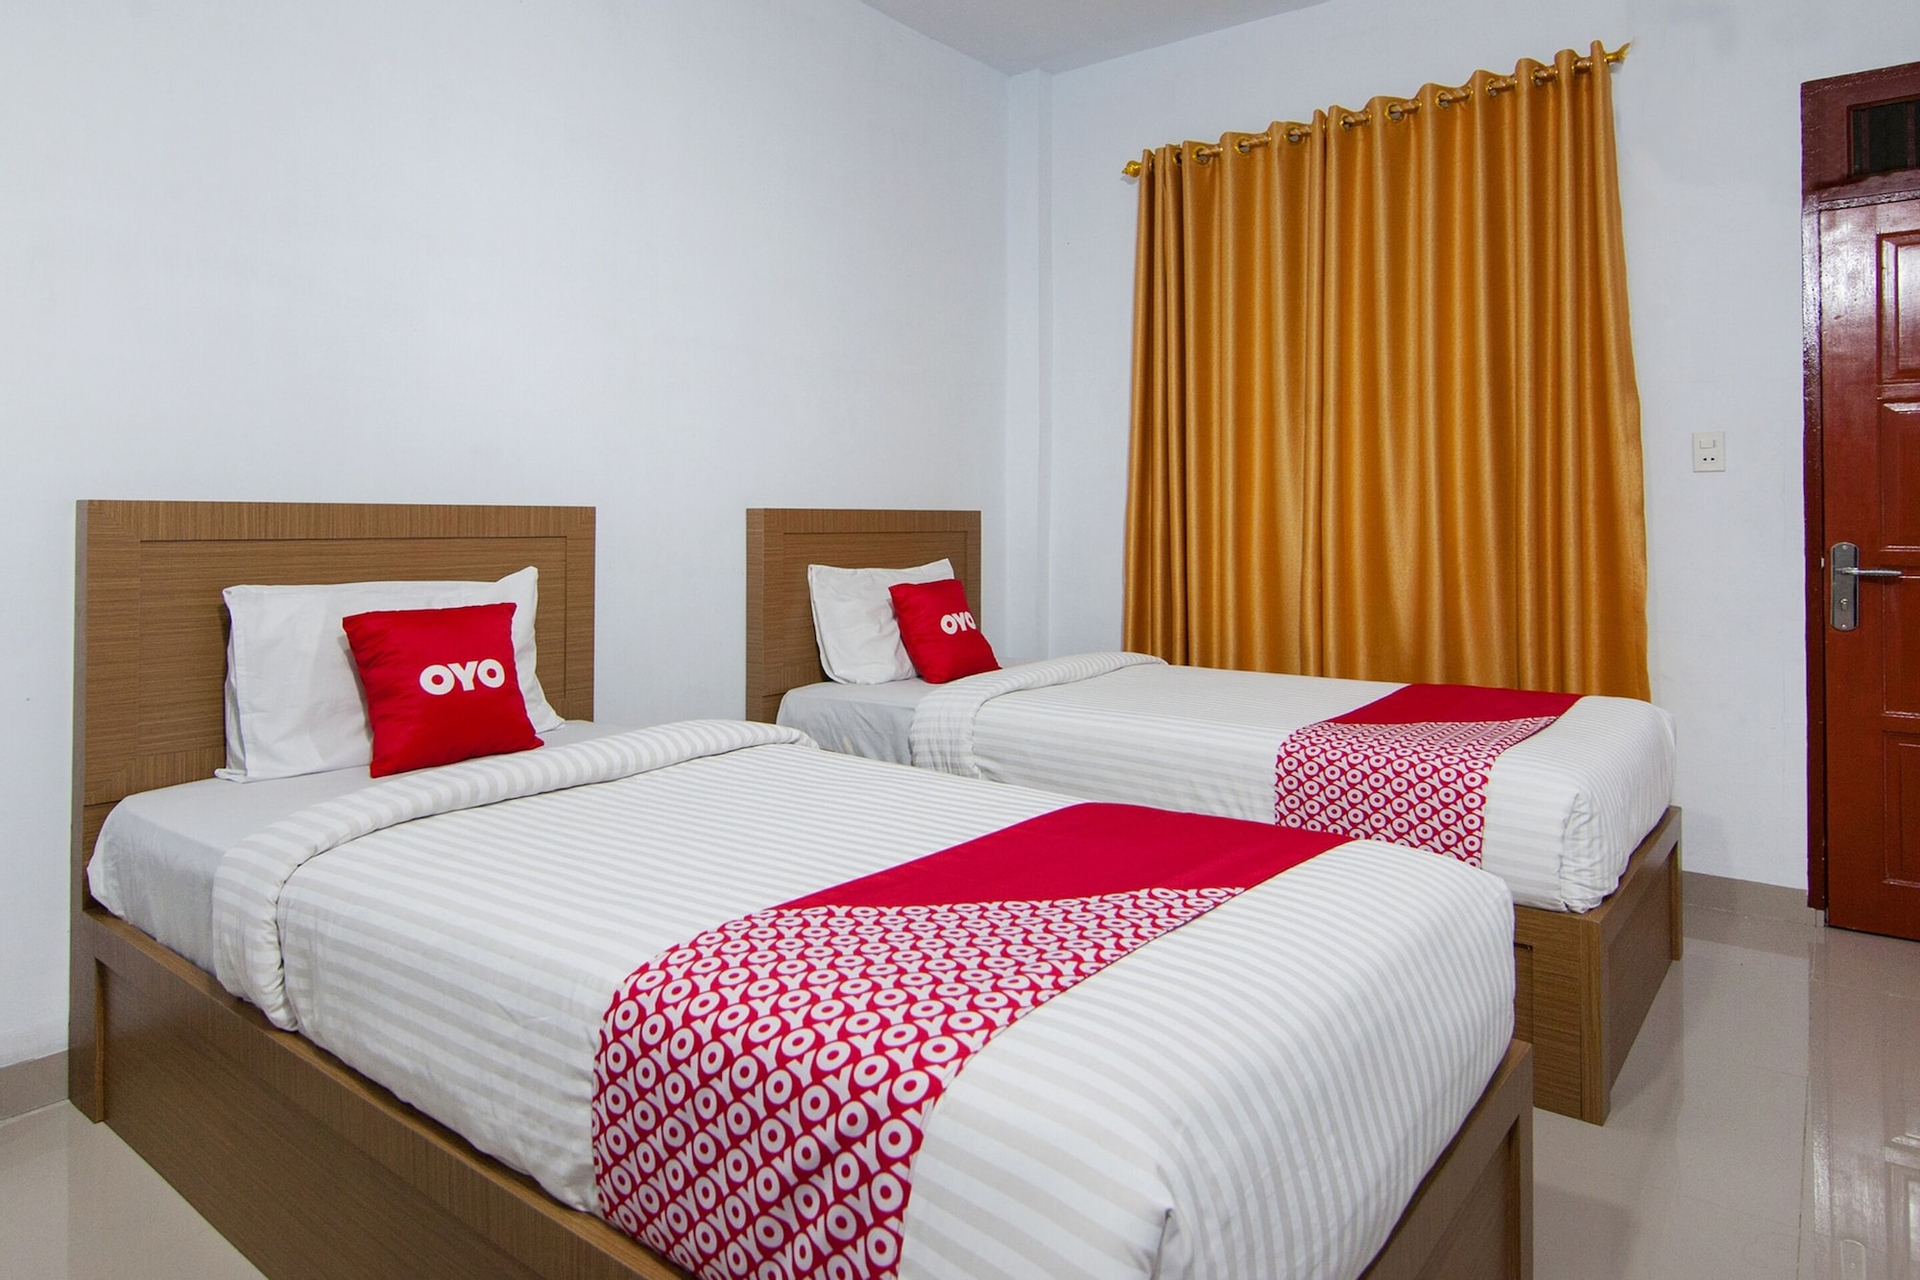 Bedroom 4, OYO 2208 Thyesza Hotel (tutup sementara), Samosir